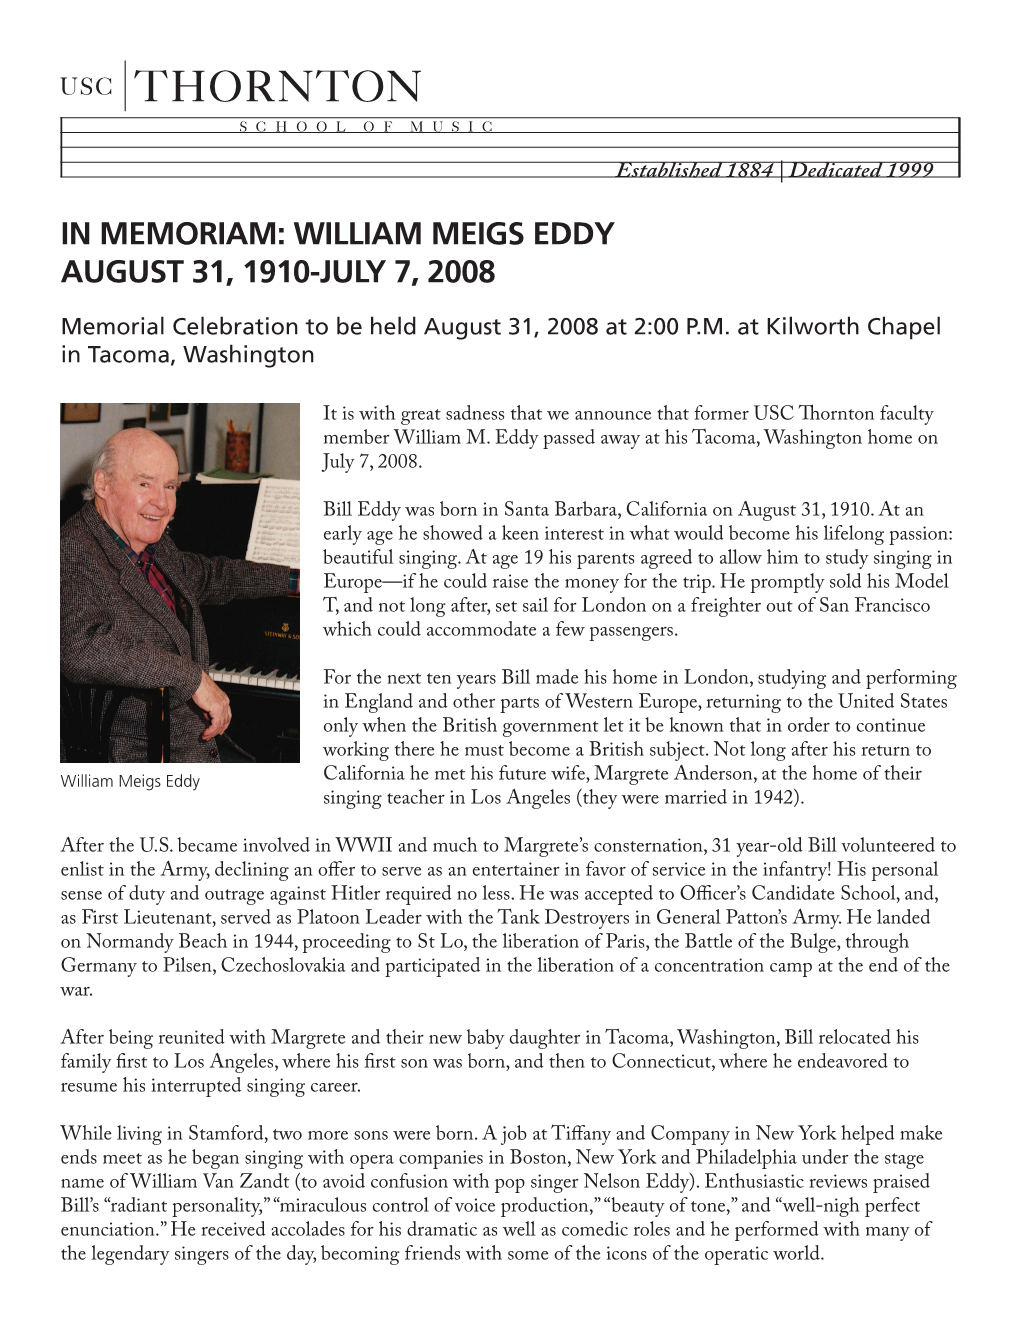 William Meigs Eddy August 31, 1910-July 7, 2008